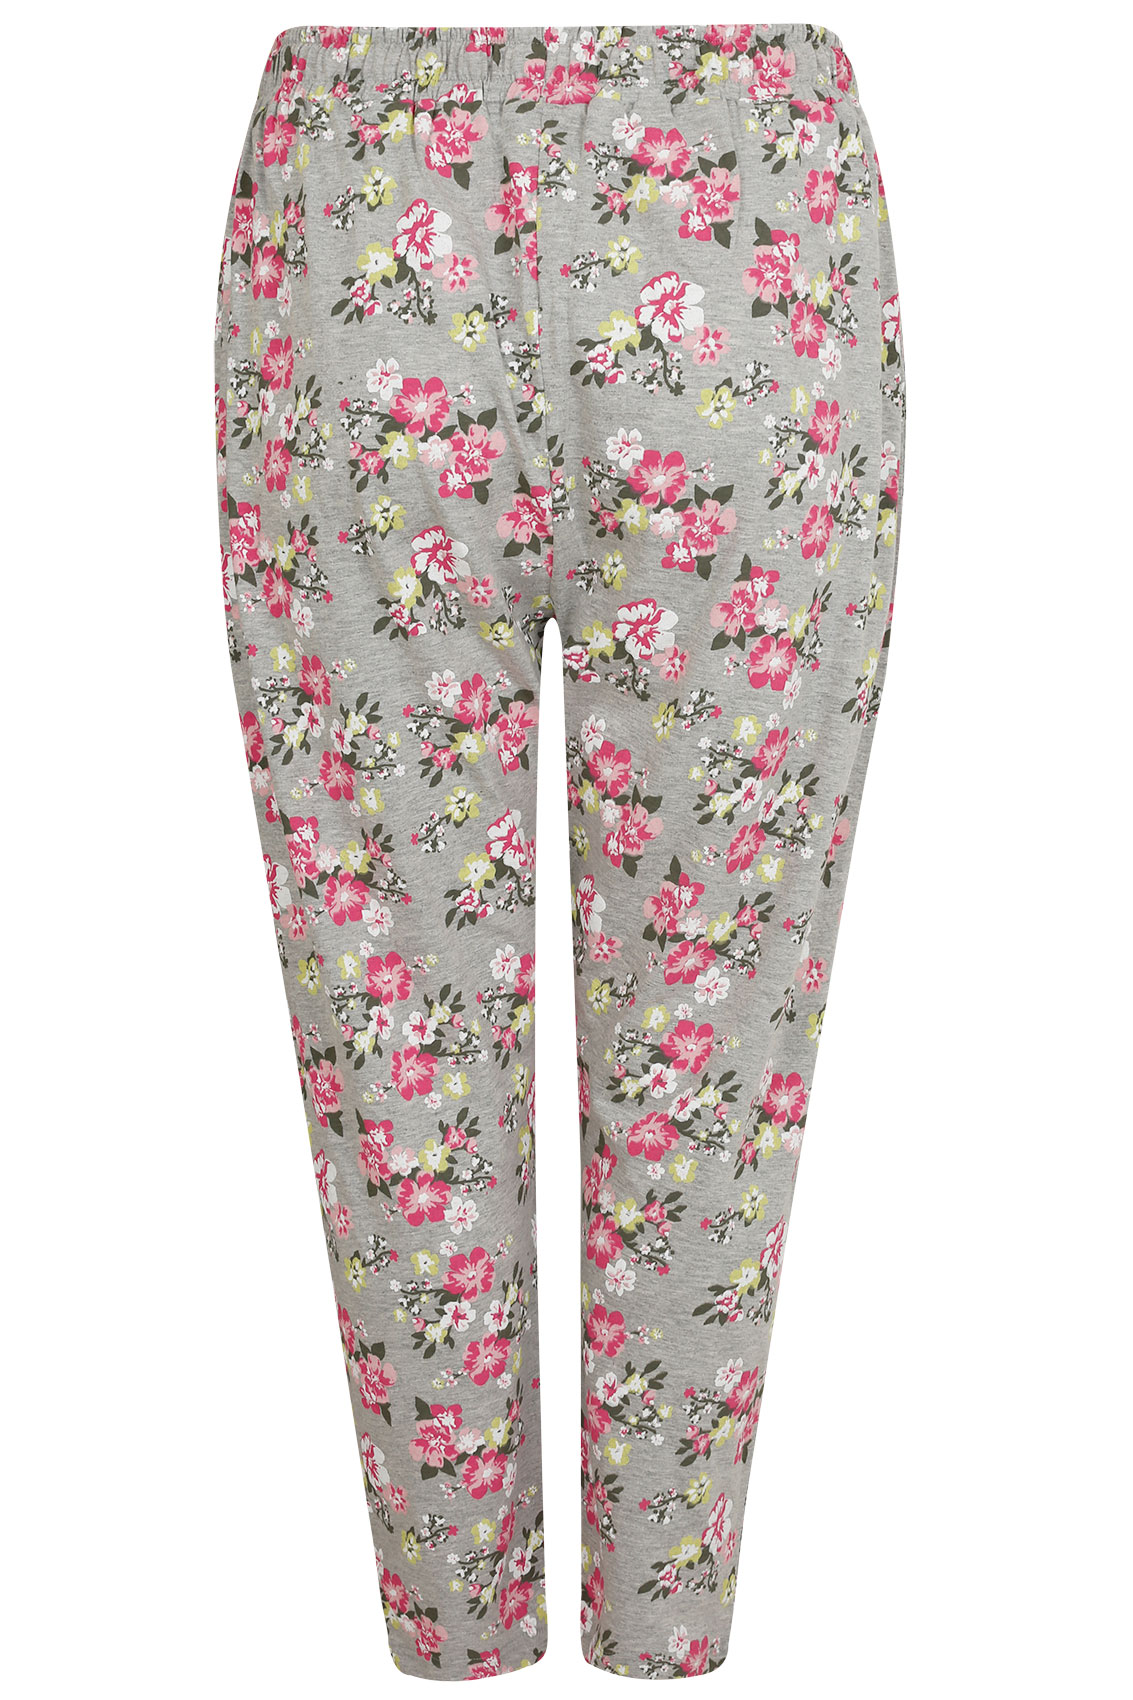 Grey & Pink Floral Print Pyjama Bottoms Plus Size 14 to 36